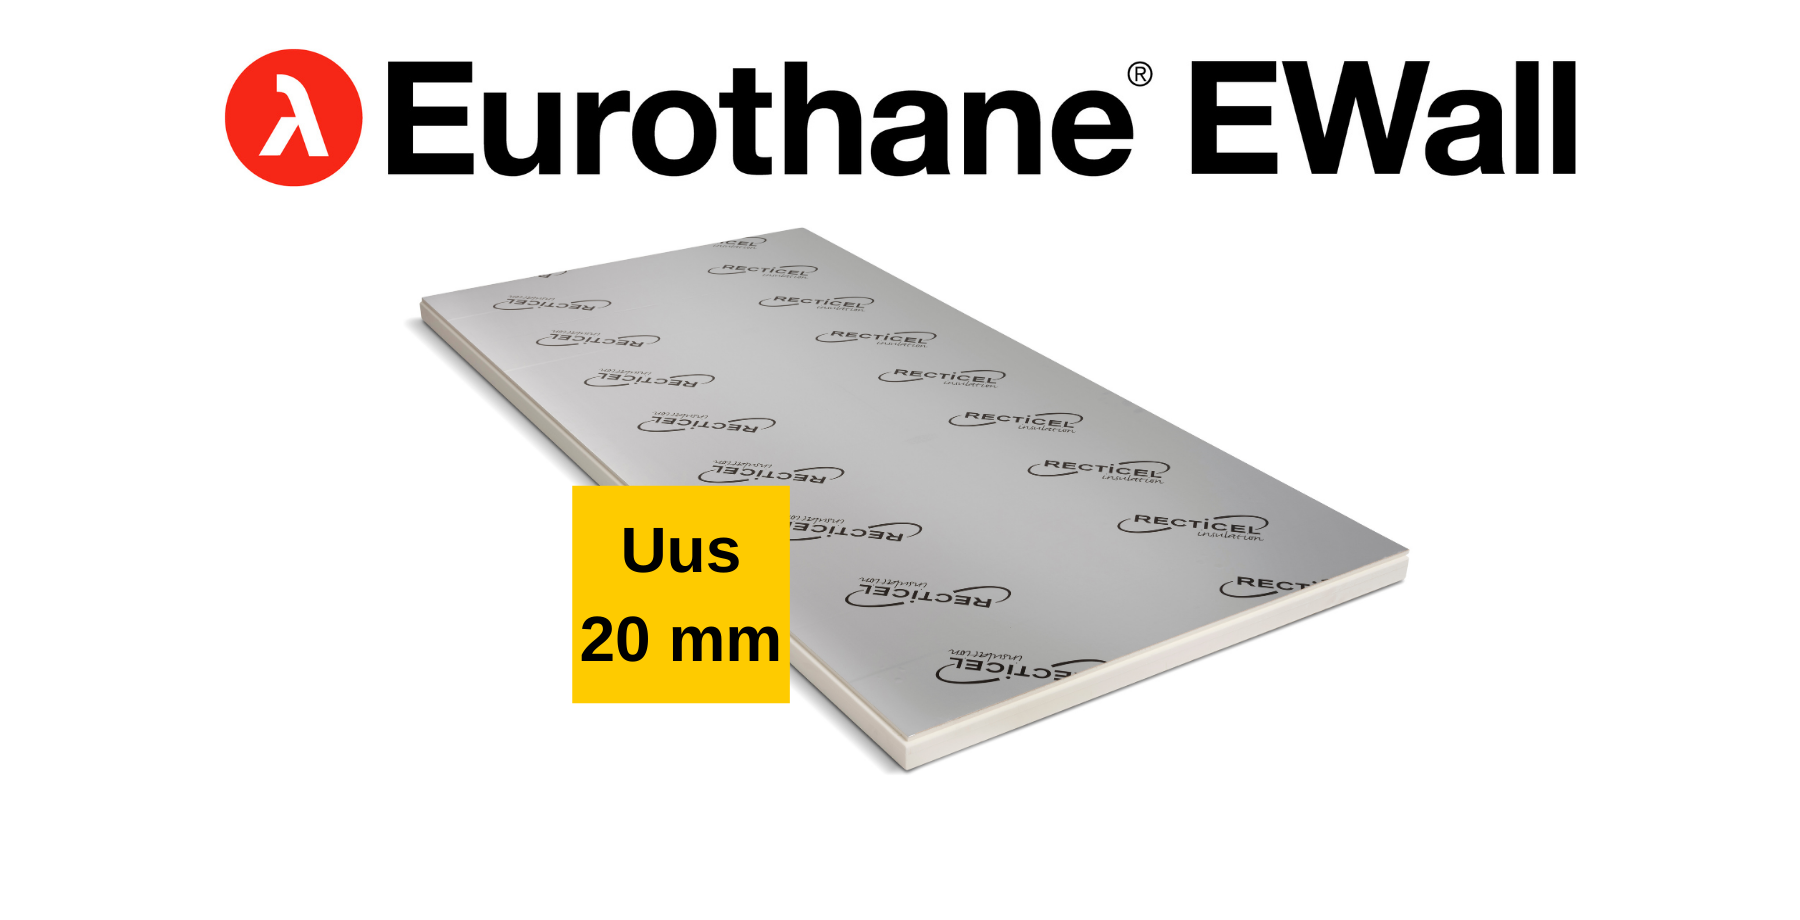 Eurothane EWall 20 mm  | Recticel Insulation